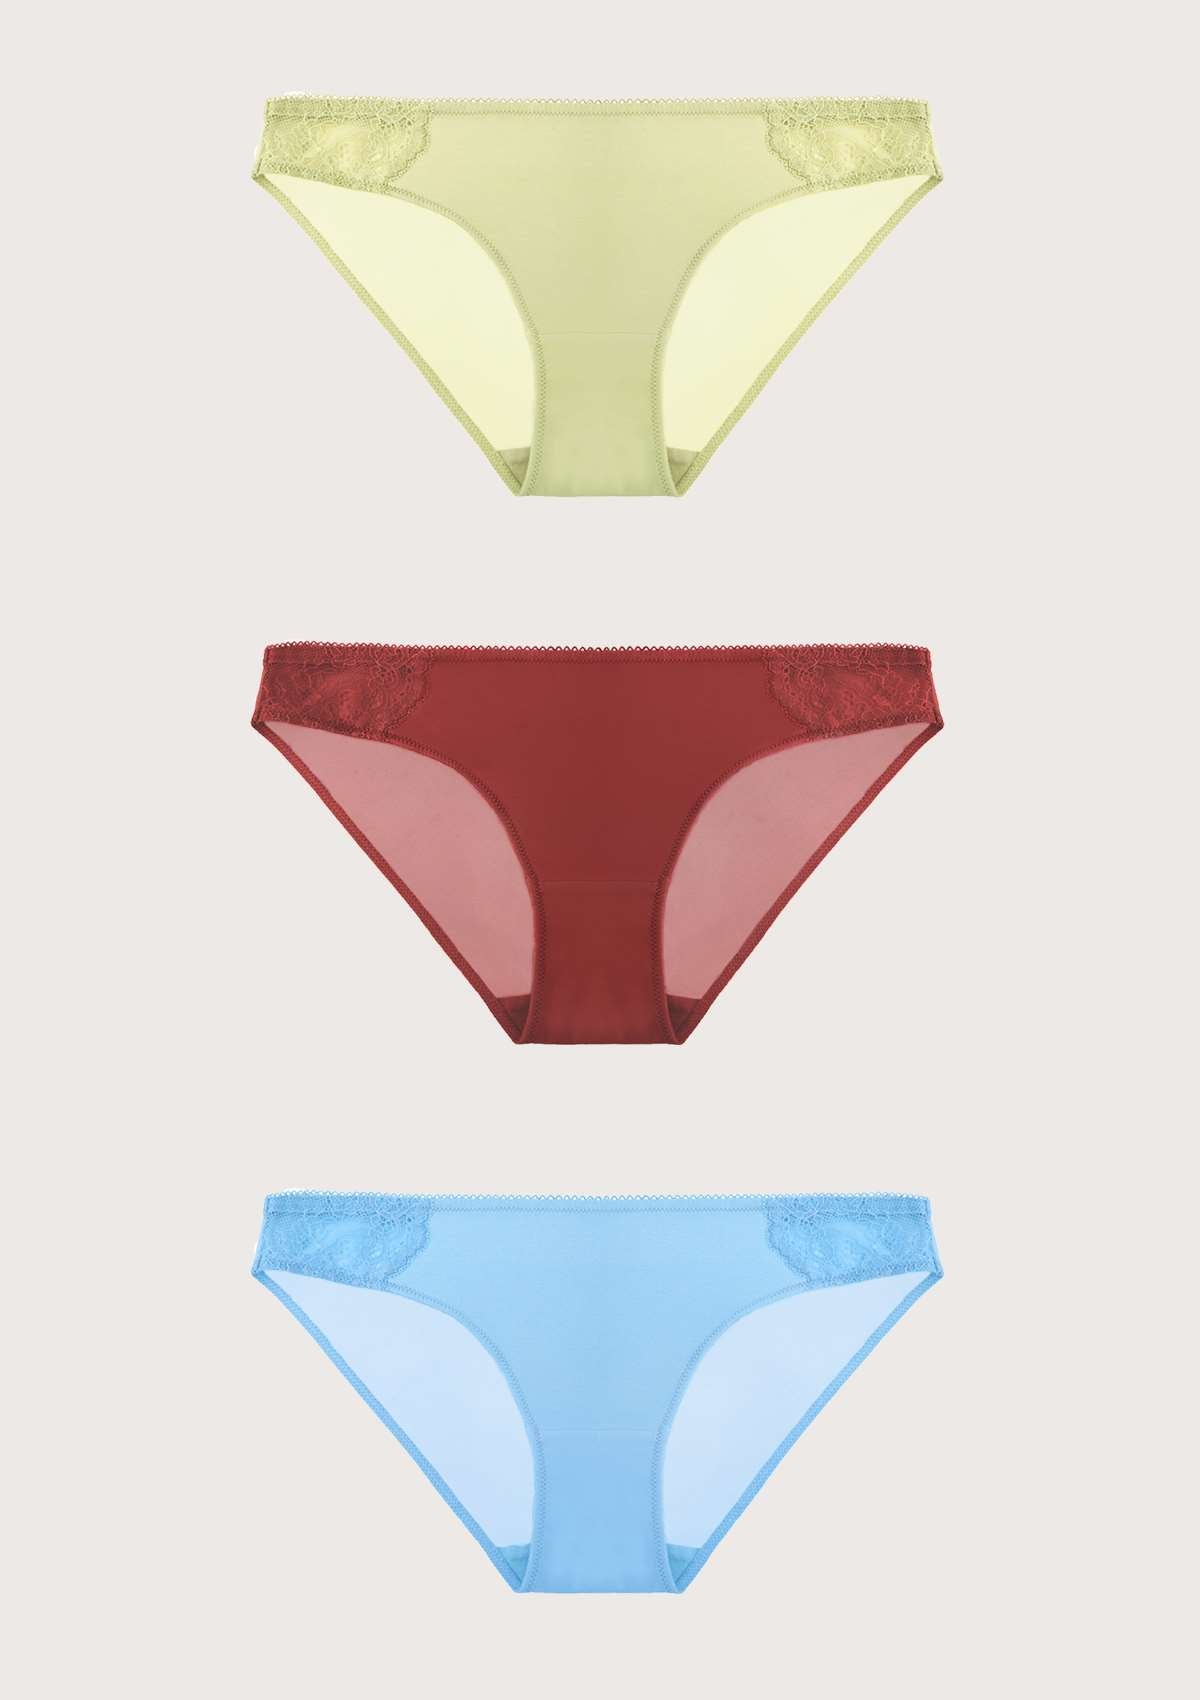 HSIA Soft Stretch Lace Bikini Panties 3 Pack - L / Light Green+Crimson+Light Blue